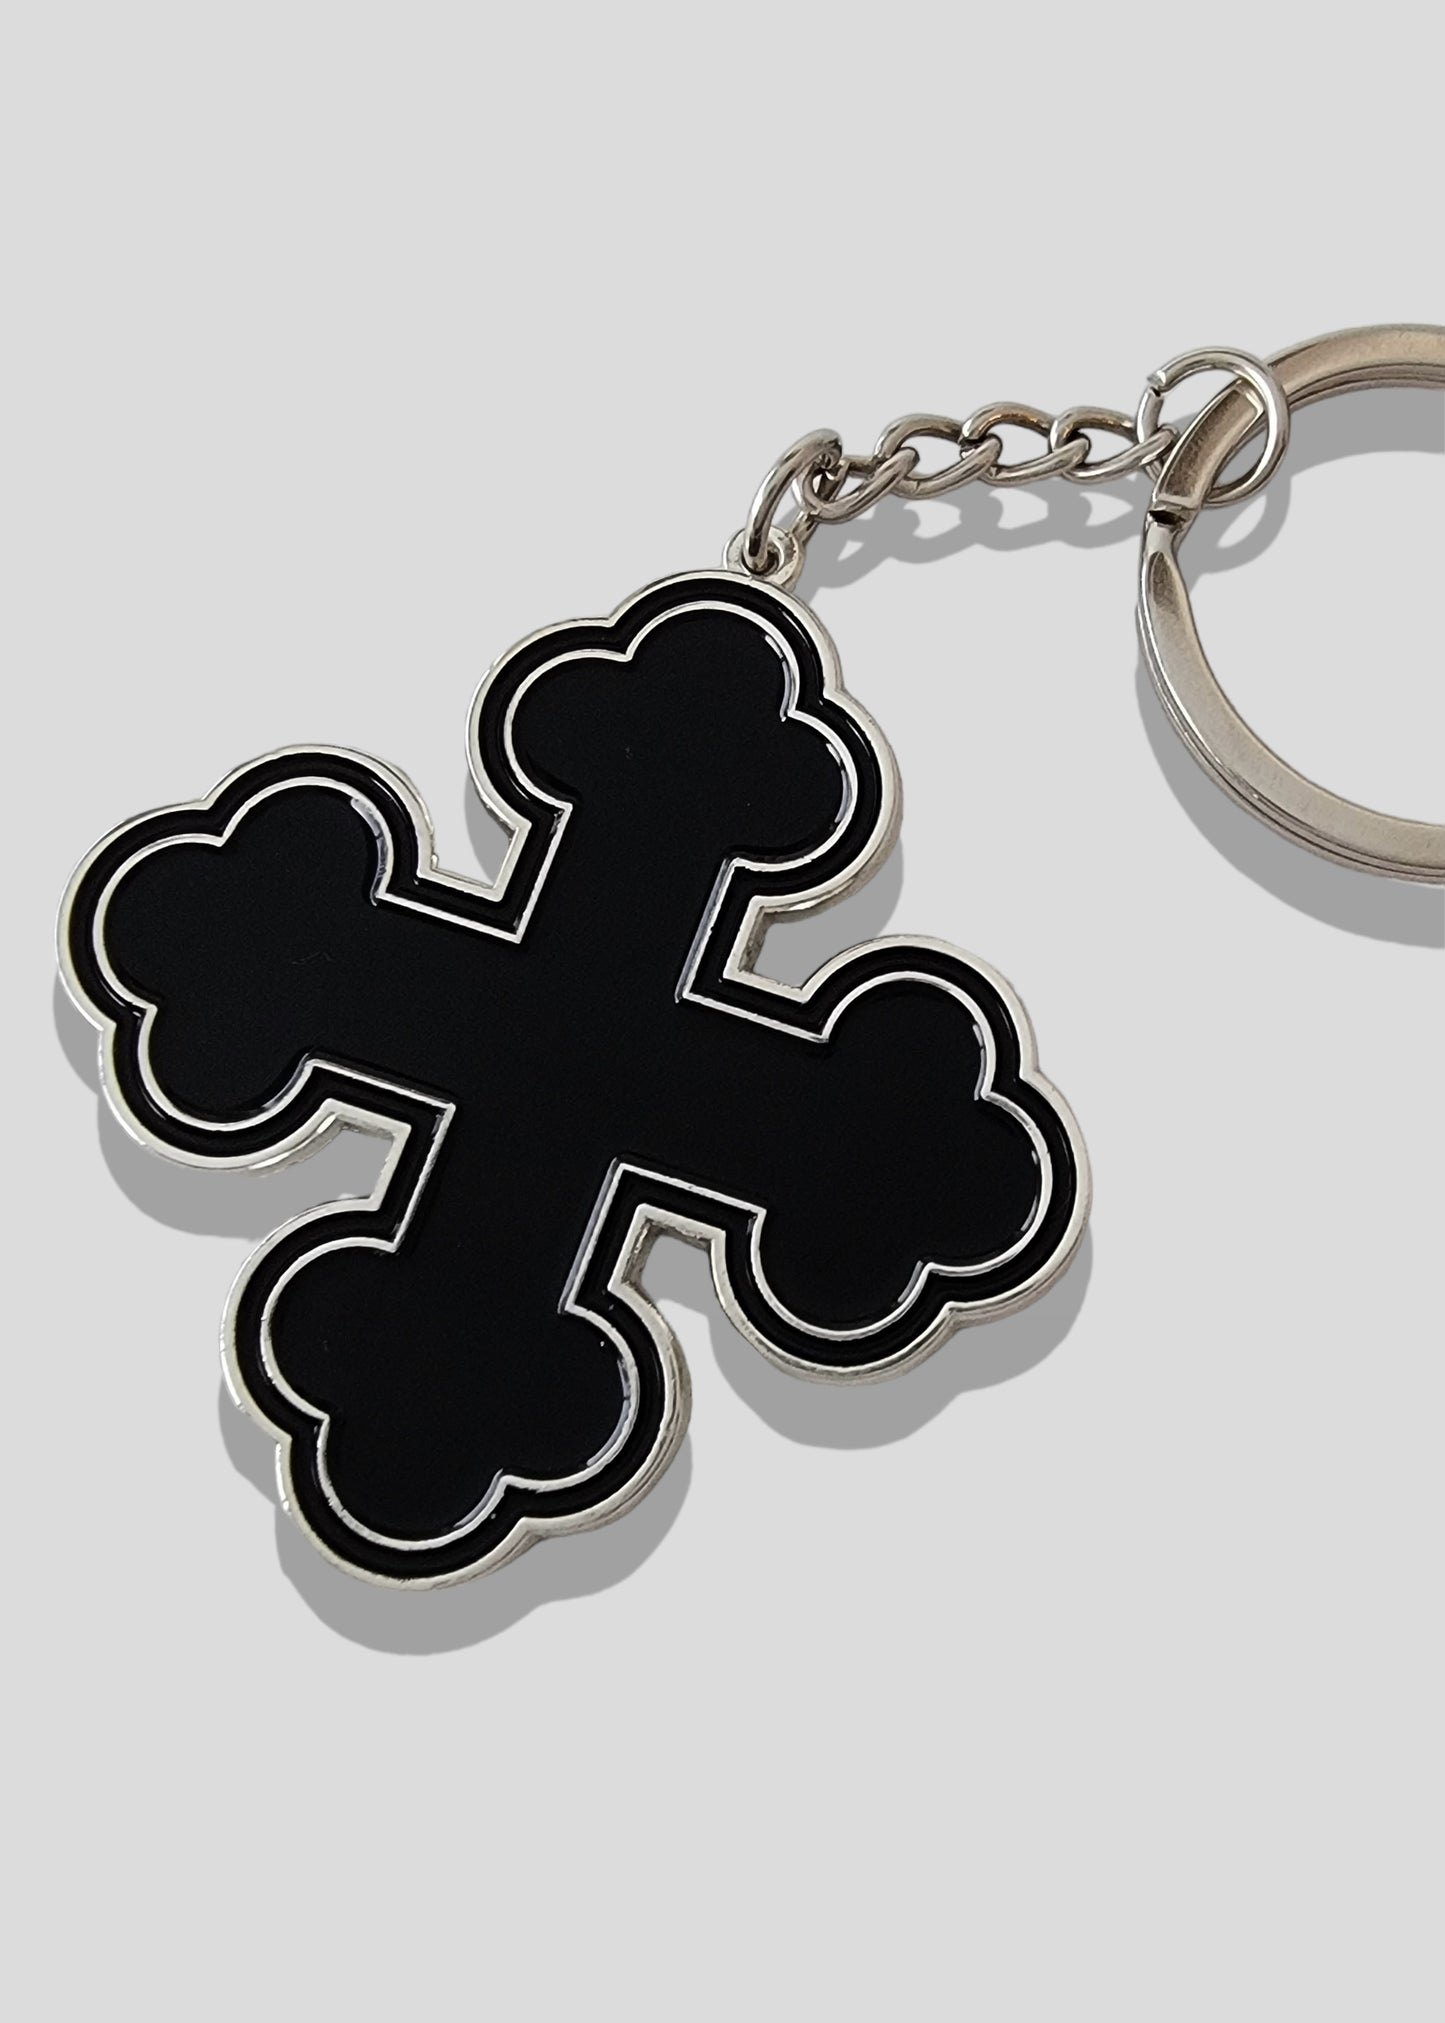 Soft Enamel Round Coptic Cross Keychains